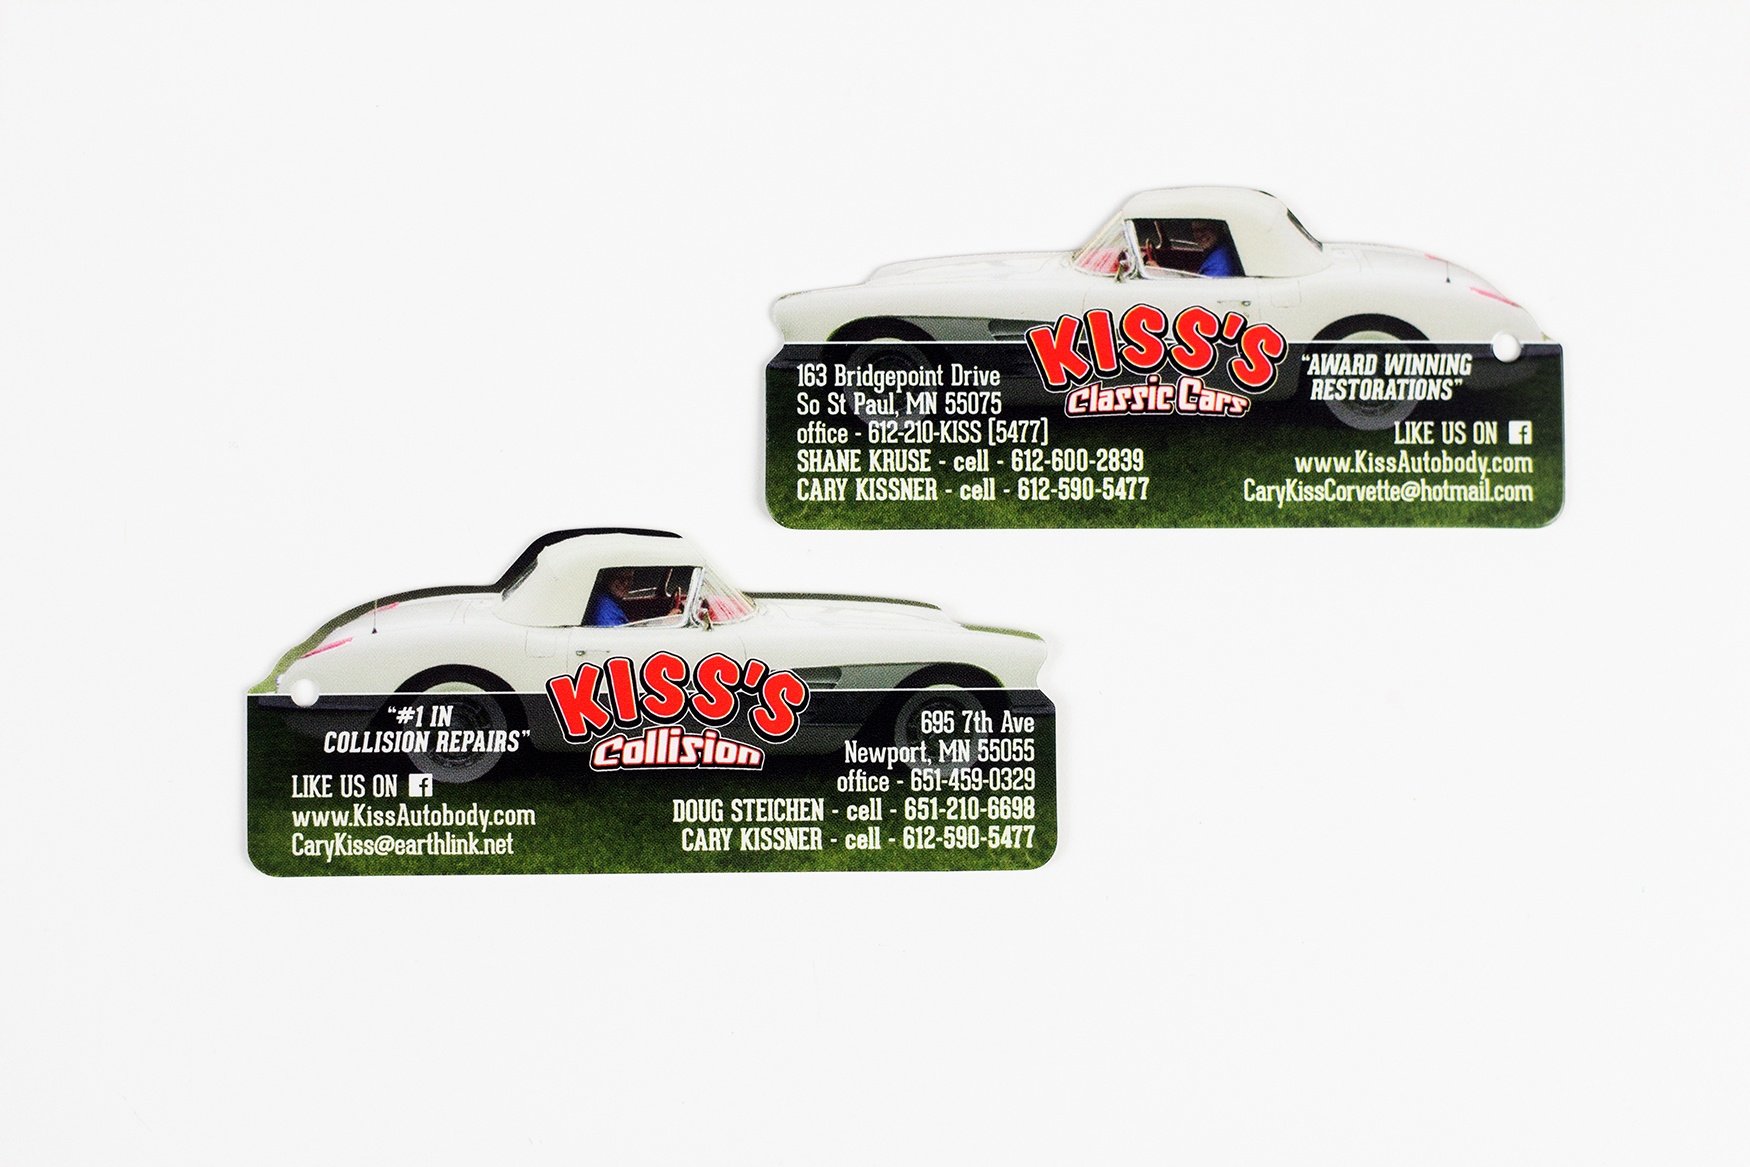 Kiss Auto Body Car Die Cut Business Cards